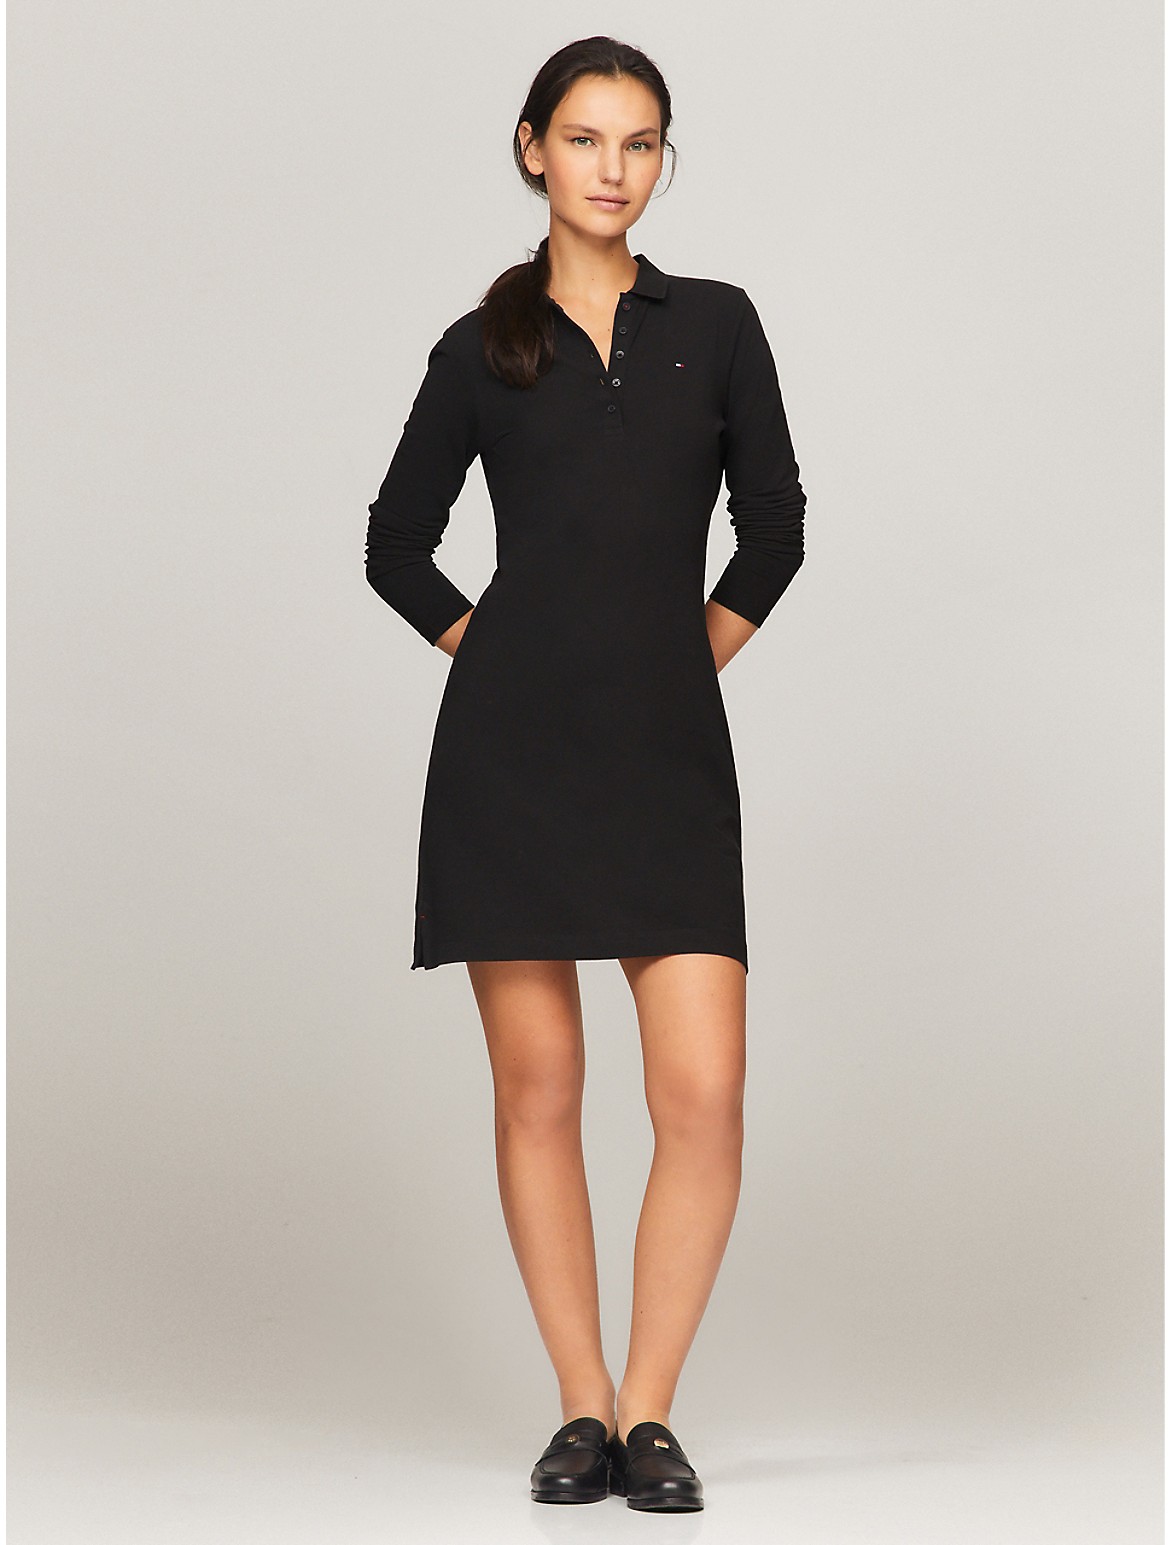 Tommy Hilfiger Women's Slim Fit Long-Sleeve Polo Dress